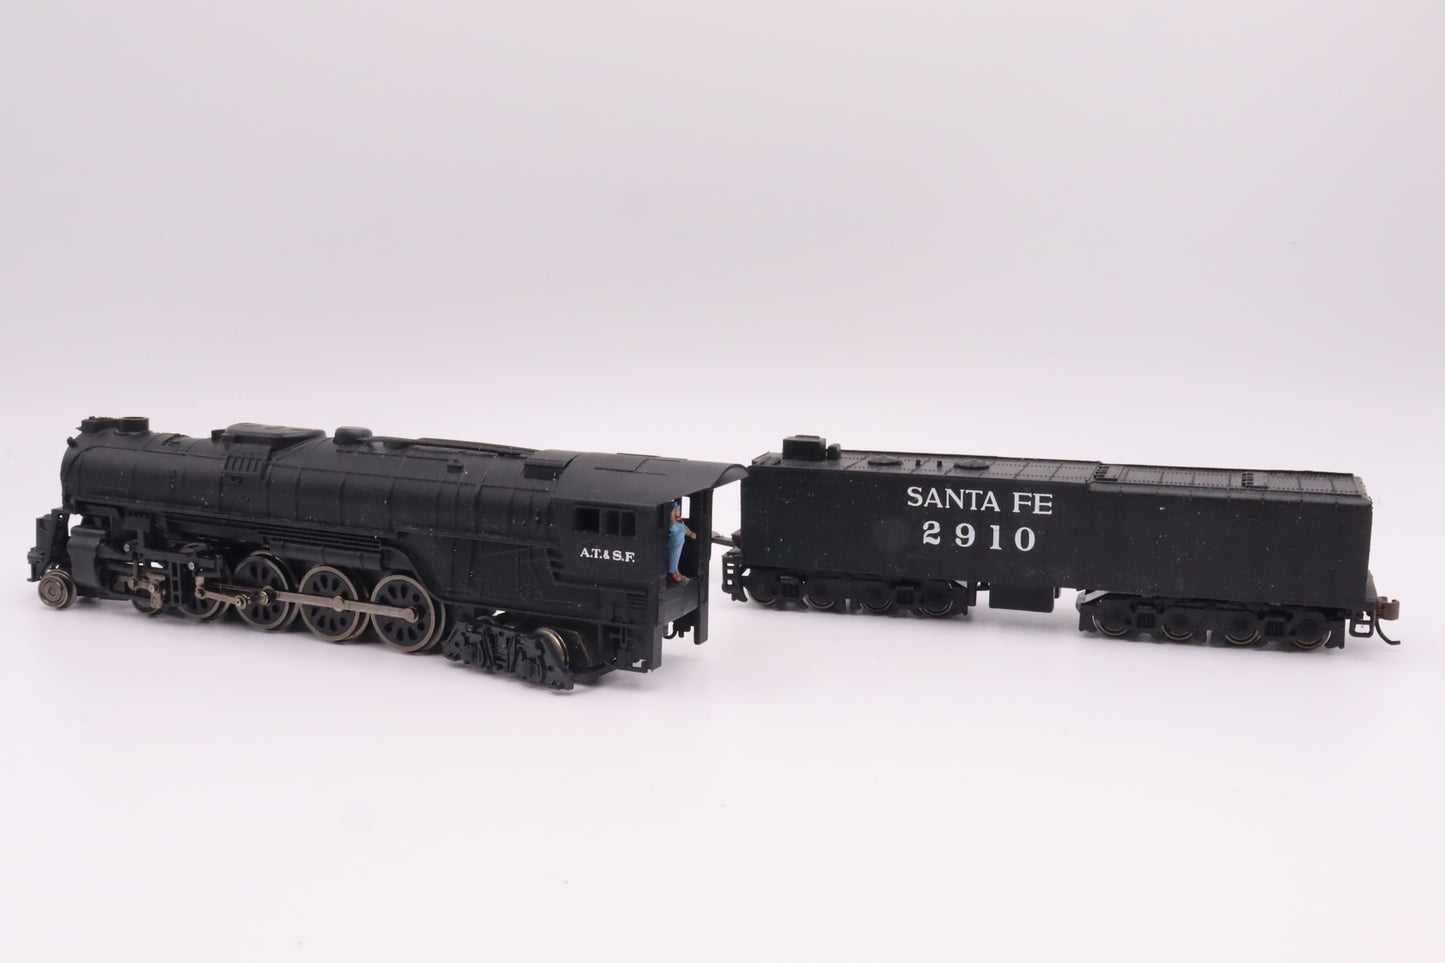 BCH-58153 - Northern 4-8-4 Steam Locomotive  & 52' Tender - Santa Fe - ATSF-2910